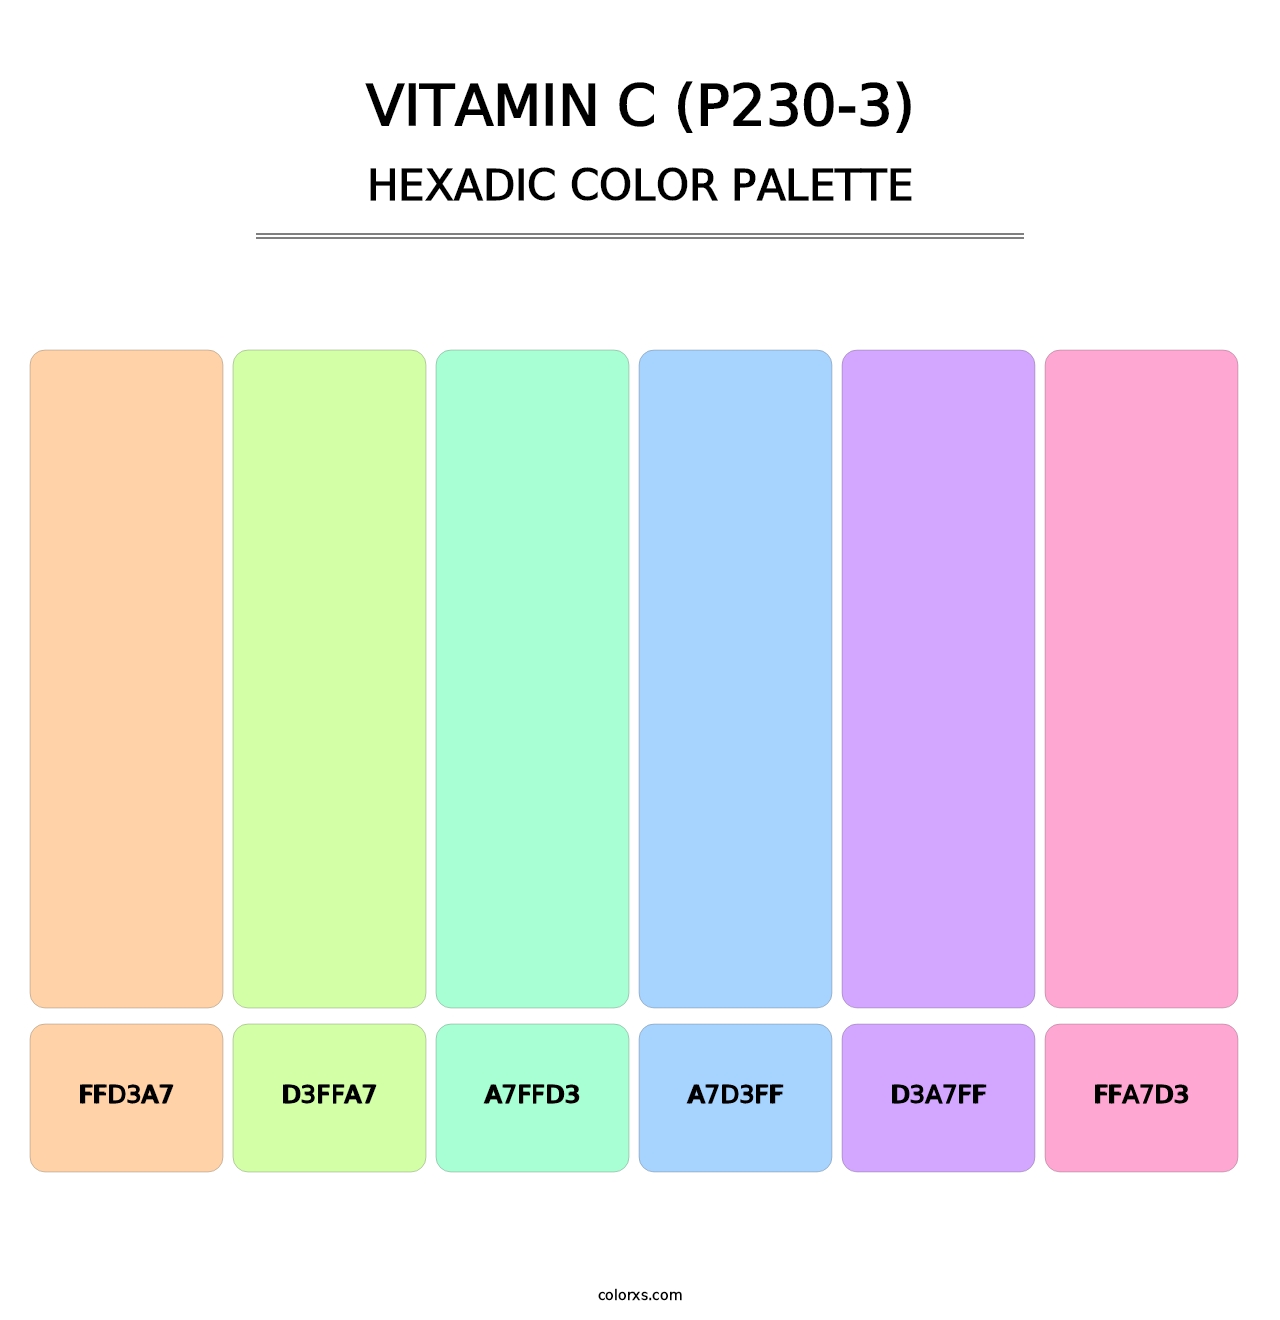 Vitamin C (P230-3) - Hexadic Color Palette